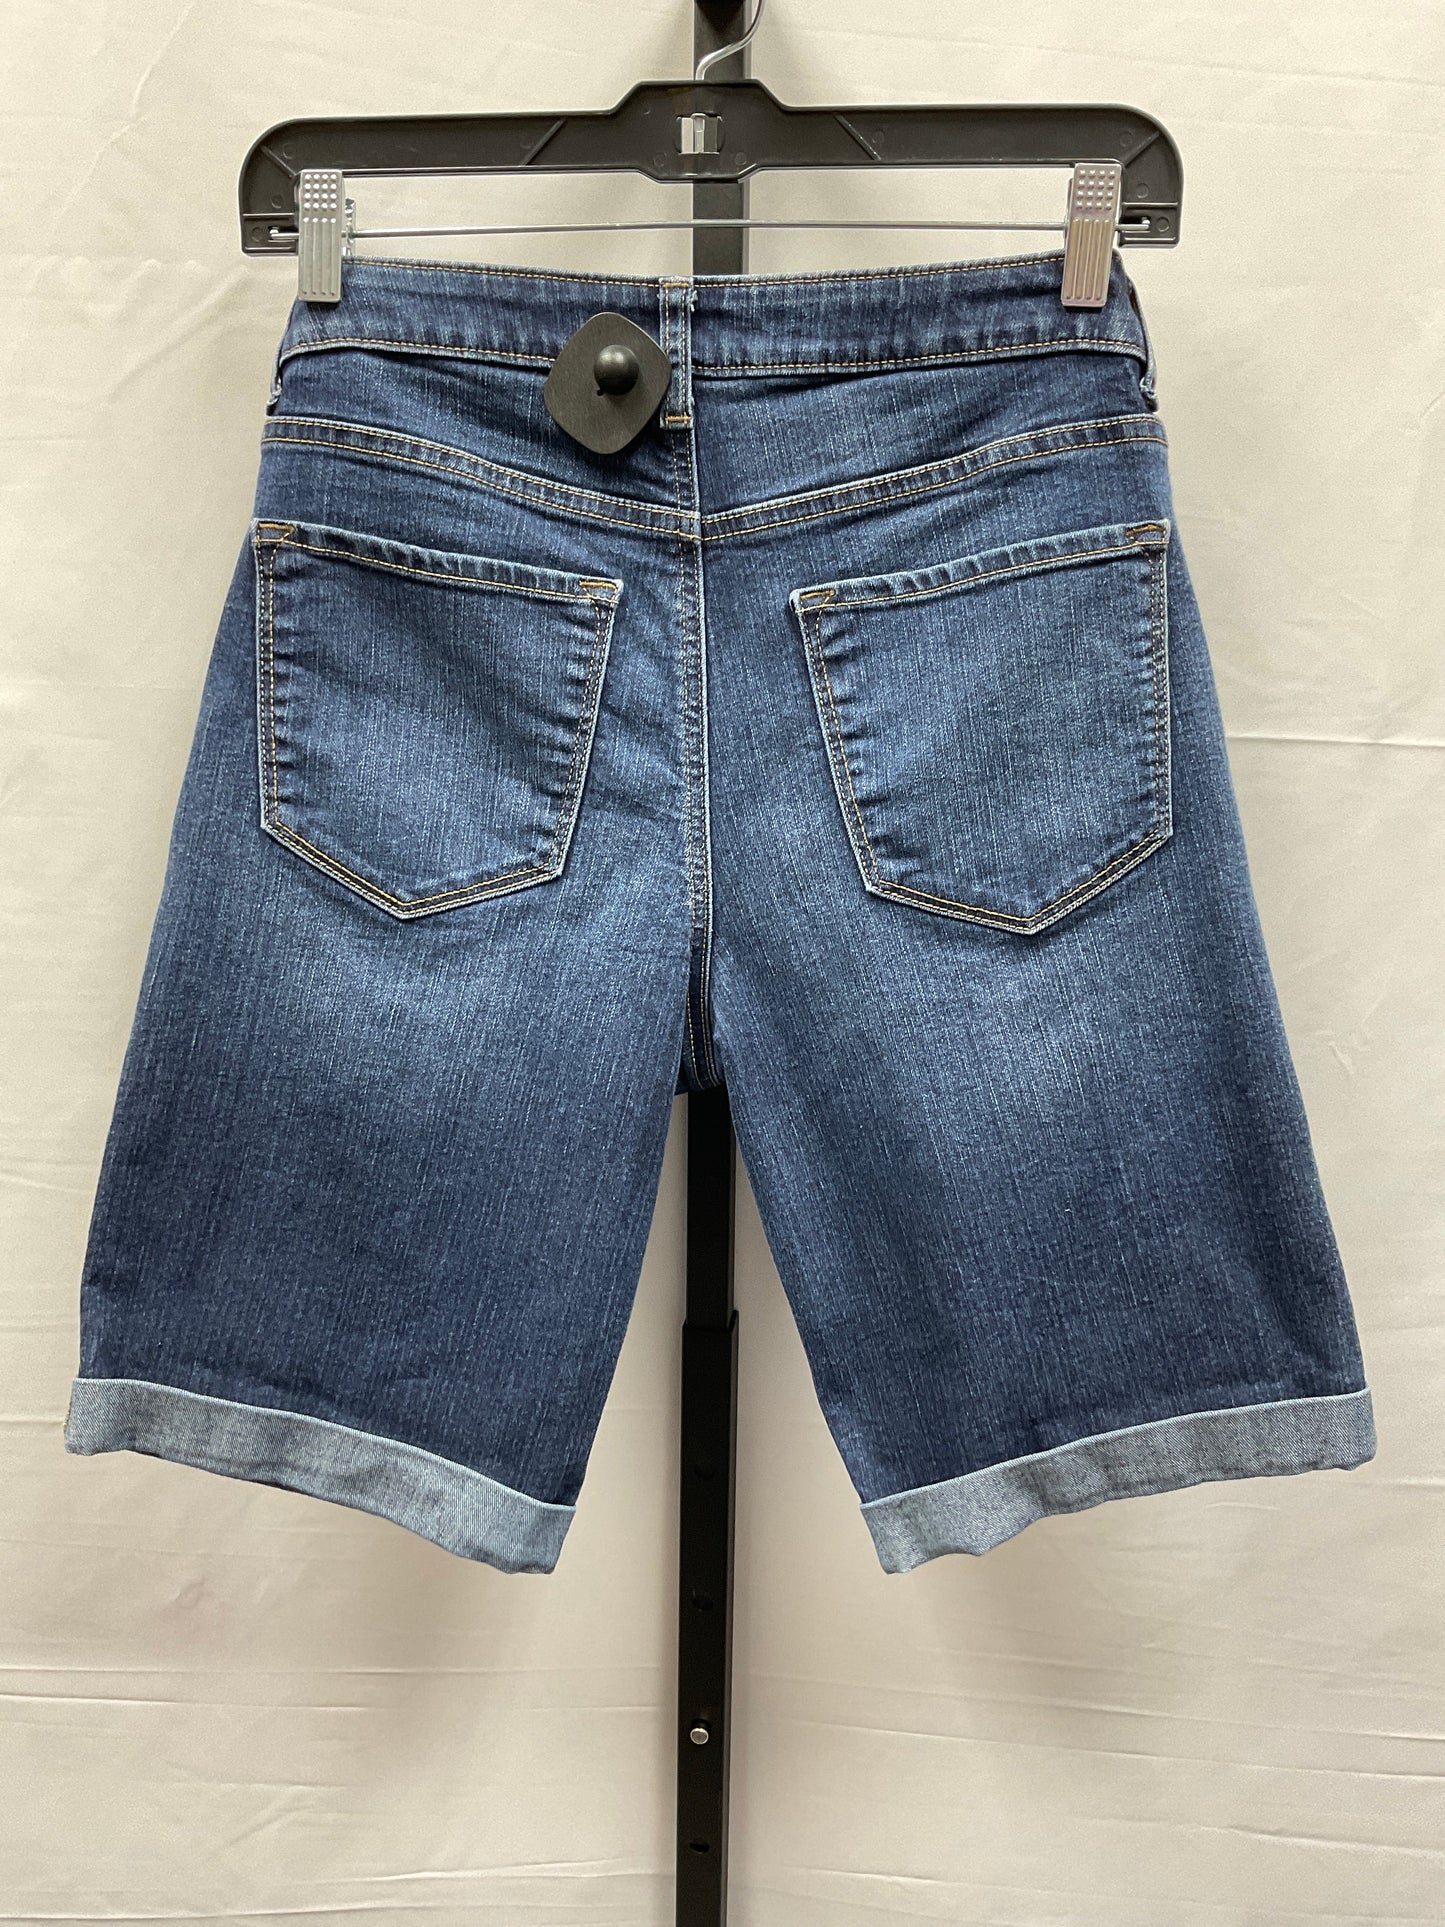 Blue Denim Shorts Apt 9, Size 8